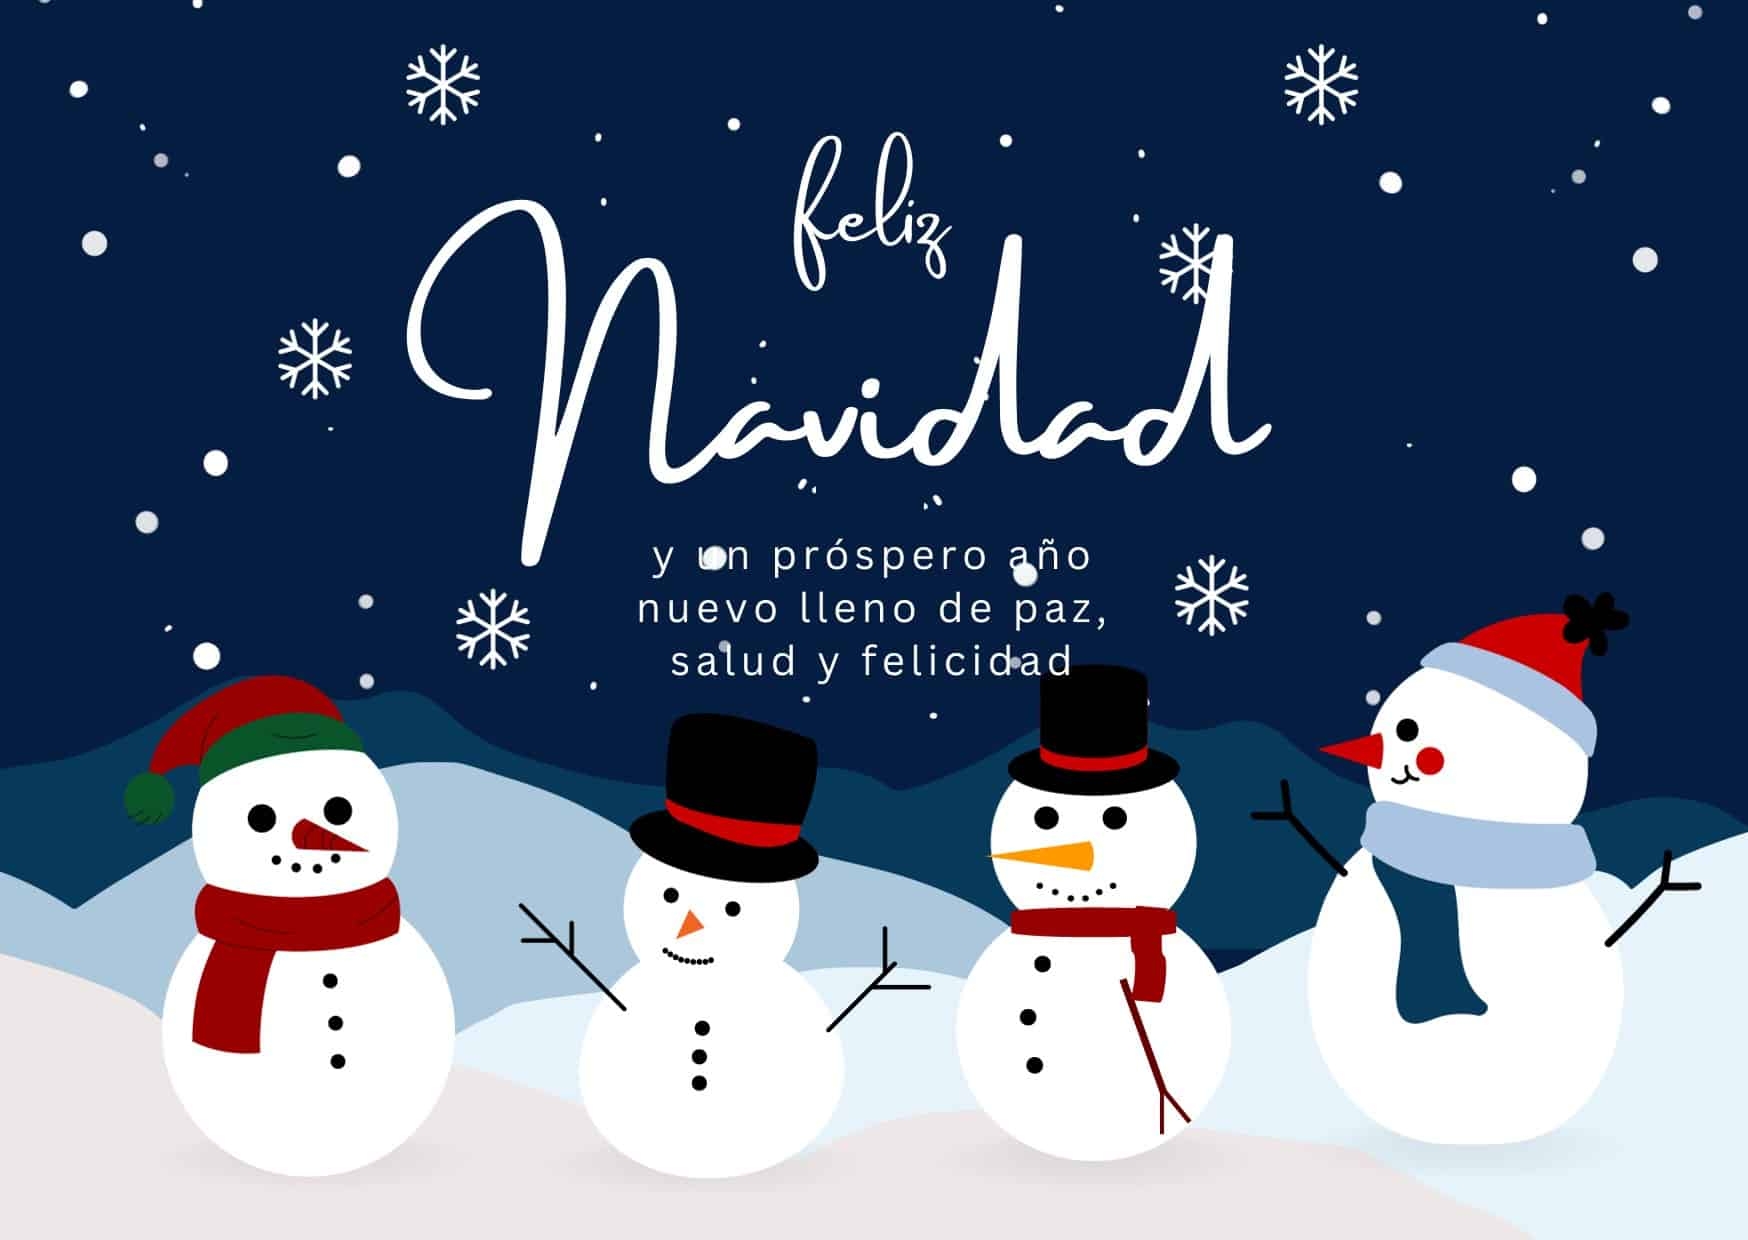 Spanish Christmas Cards Printable Free